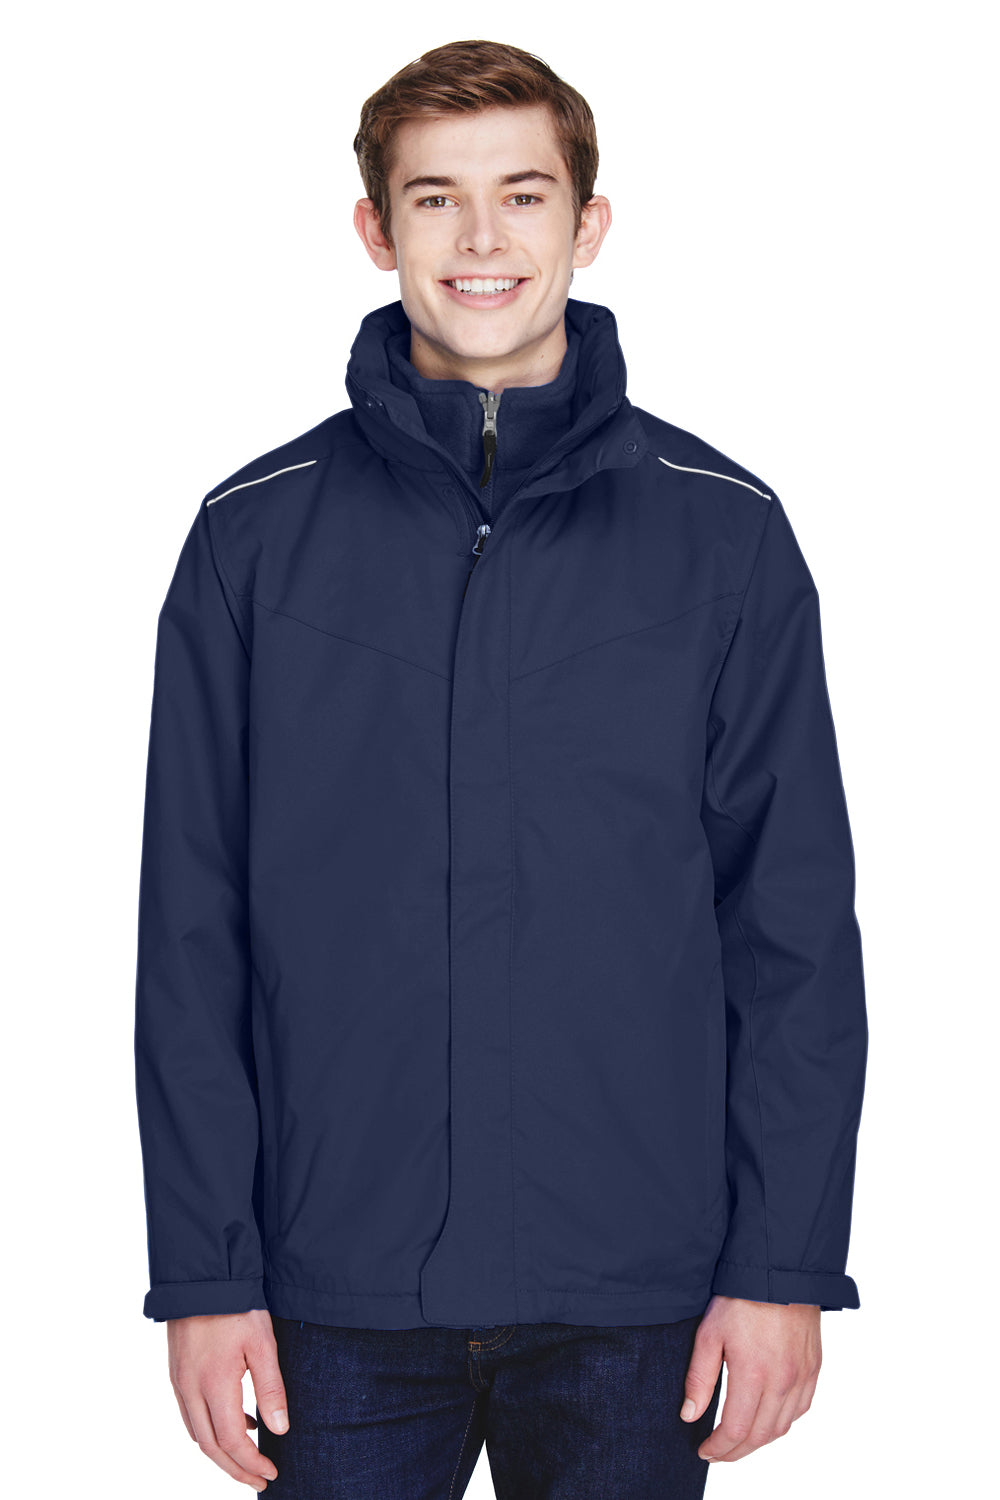 Core 365 88205 Mens Region 3-in-1 Water Resistant Full Zip Hooded Jacket Navy Blue Front